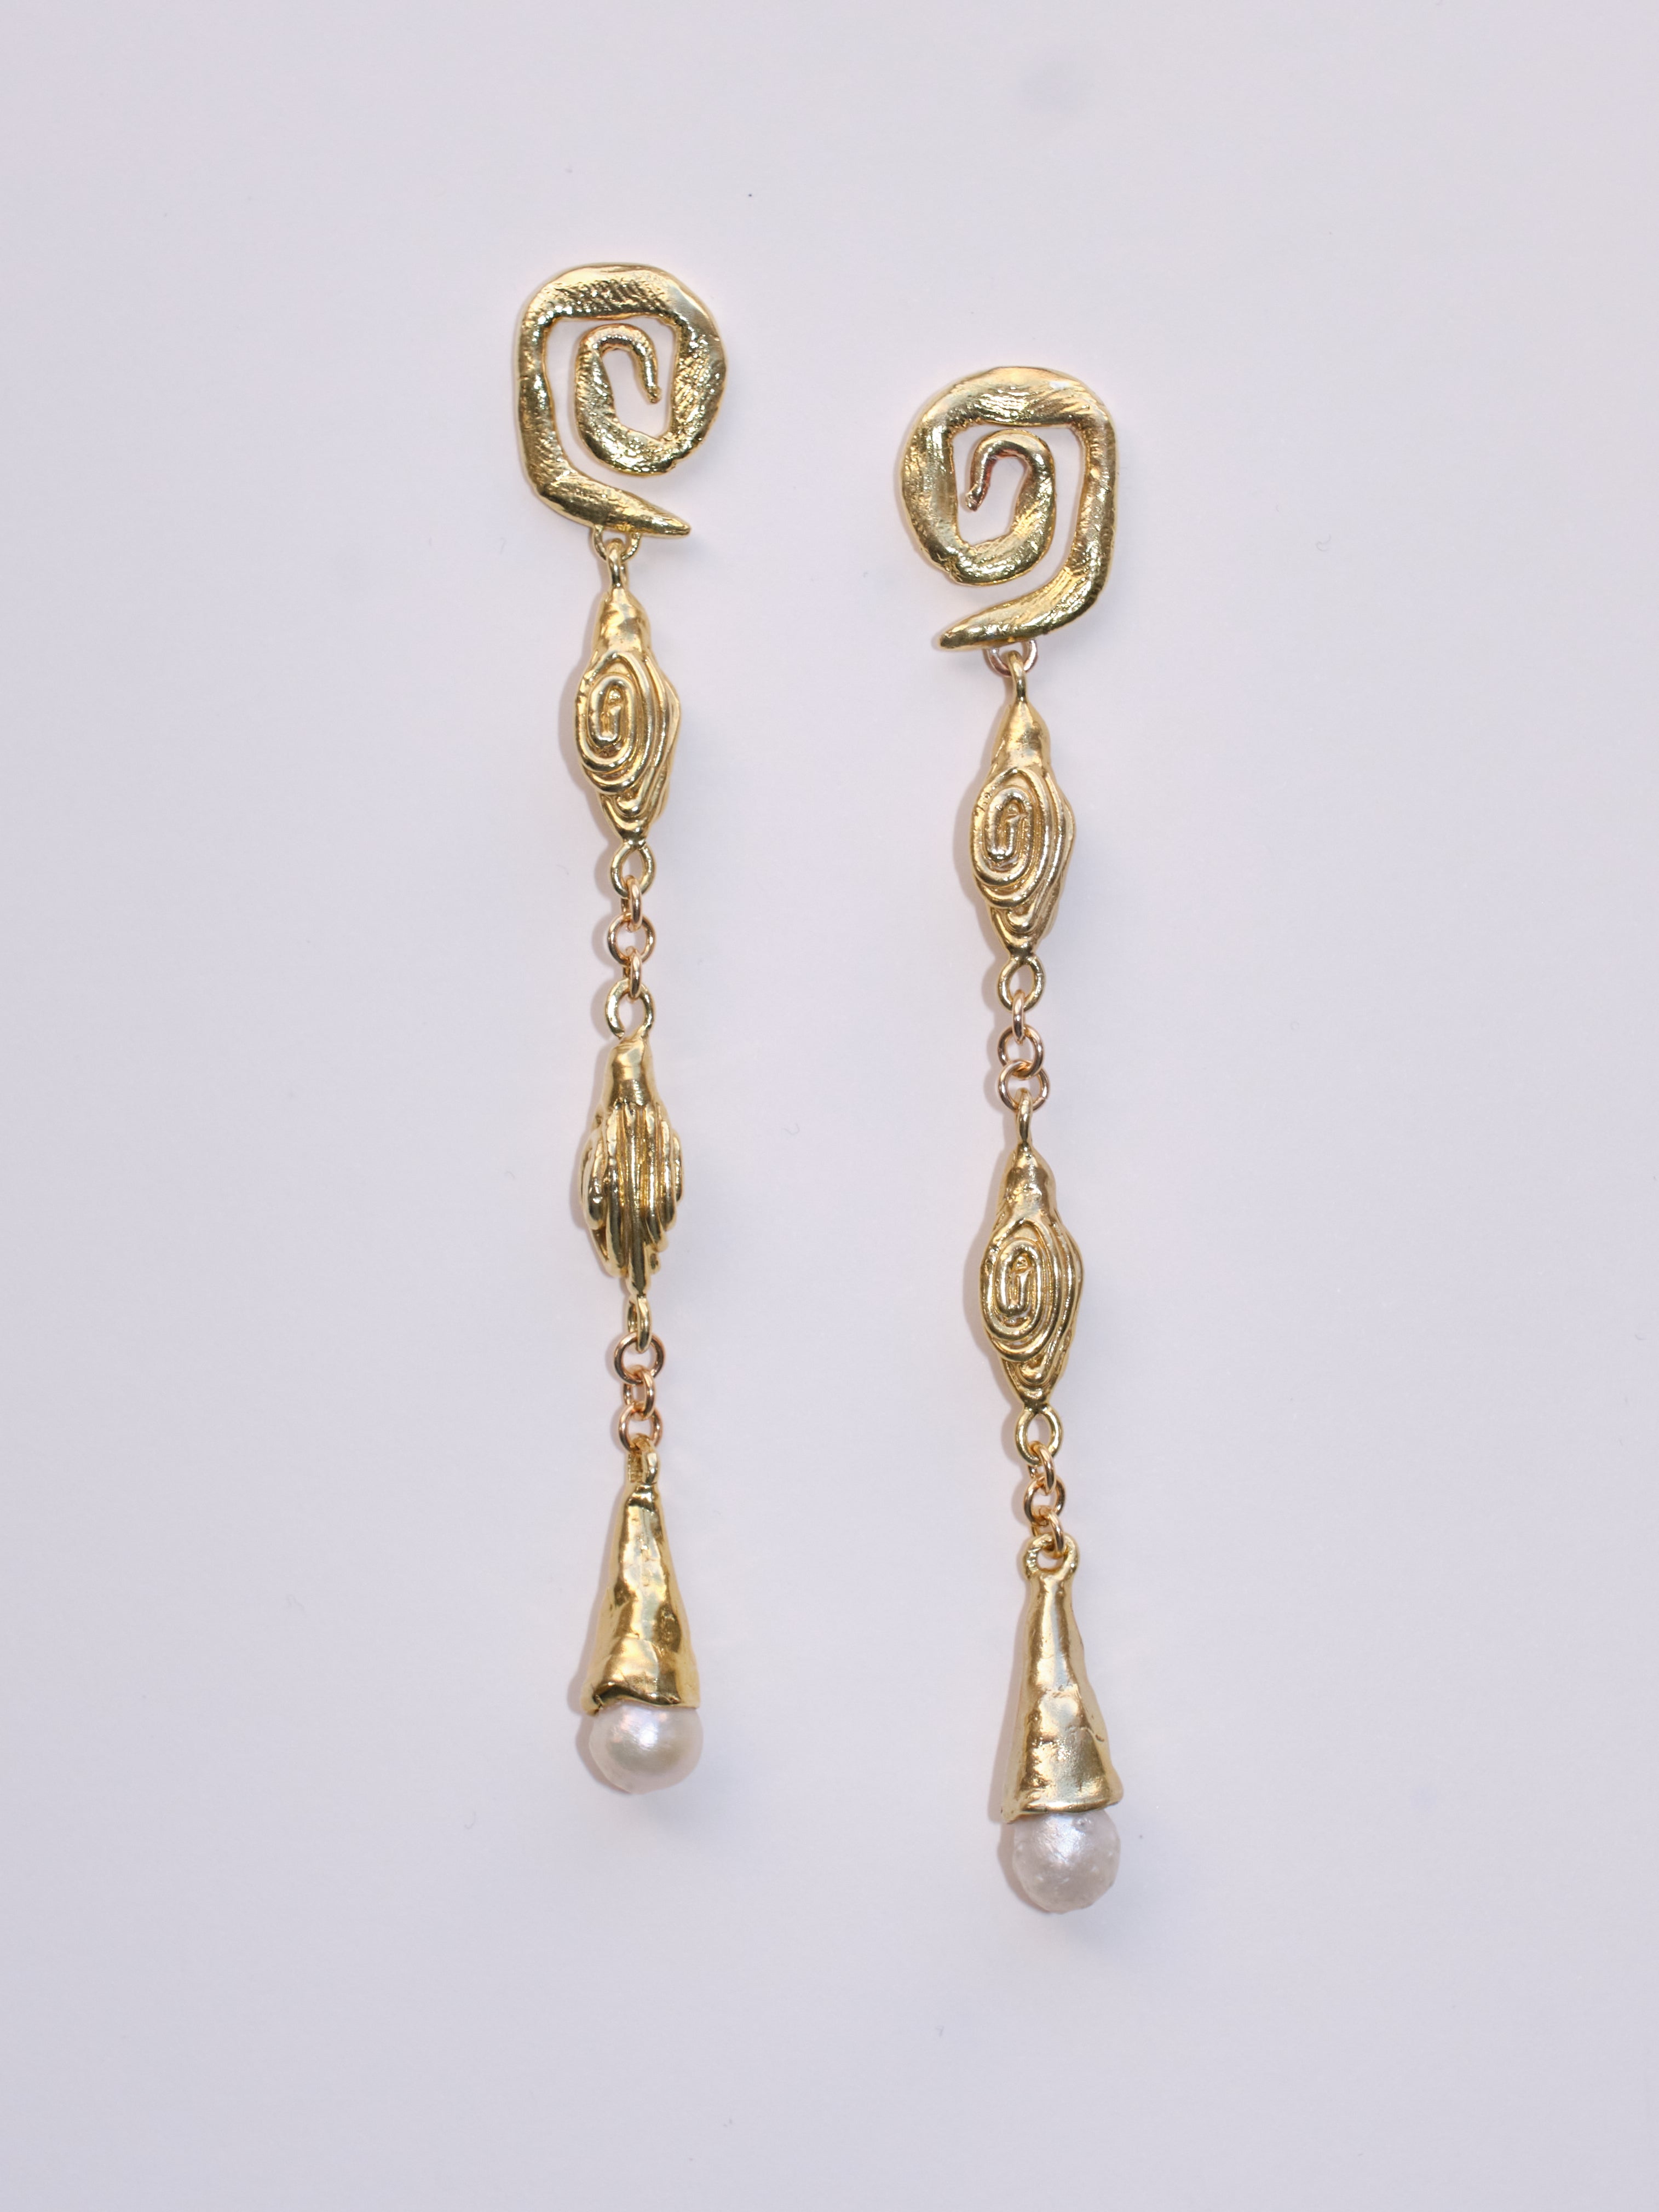 Silver Dragon Earrings Gothic Clip On Mistery Fantasy Jewelry Non Pierced  Cuffs | eBay